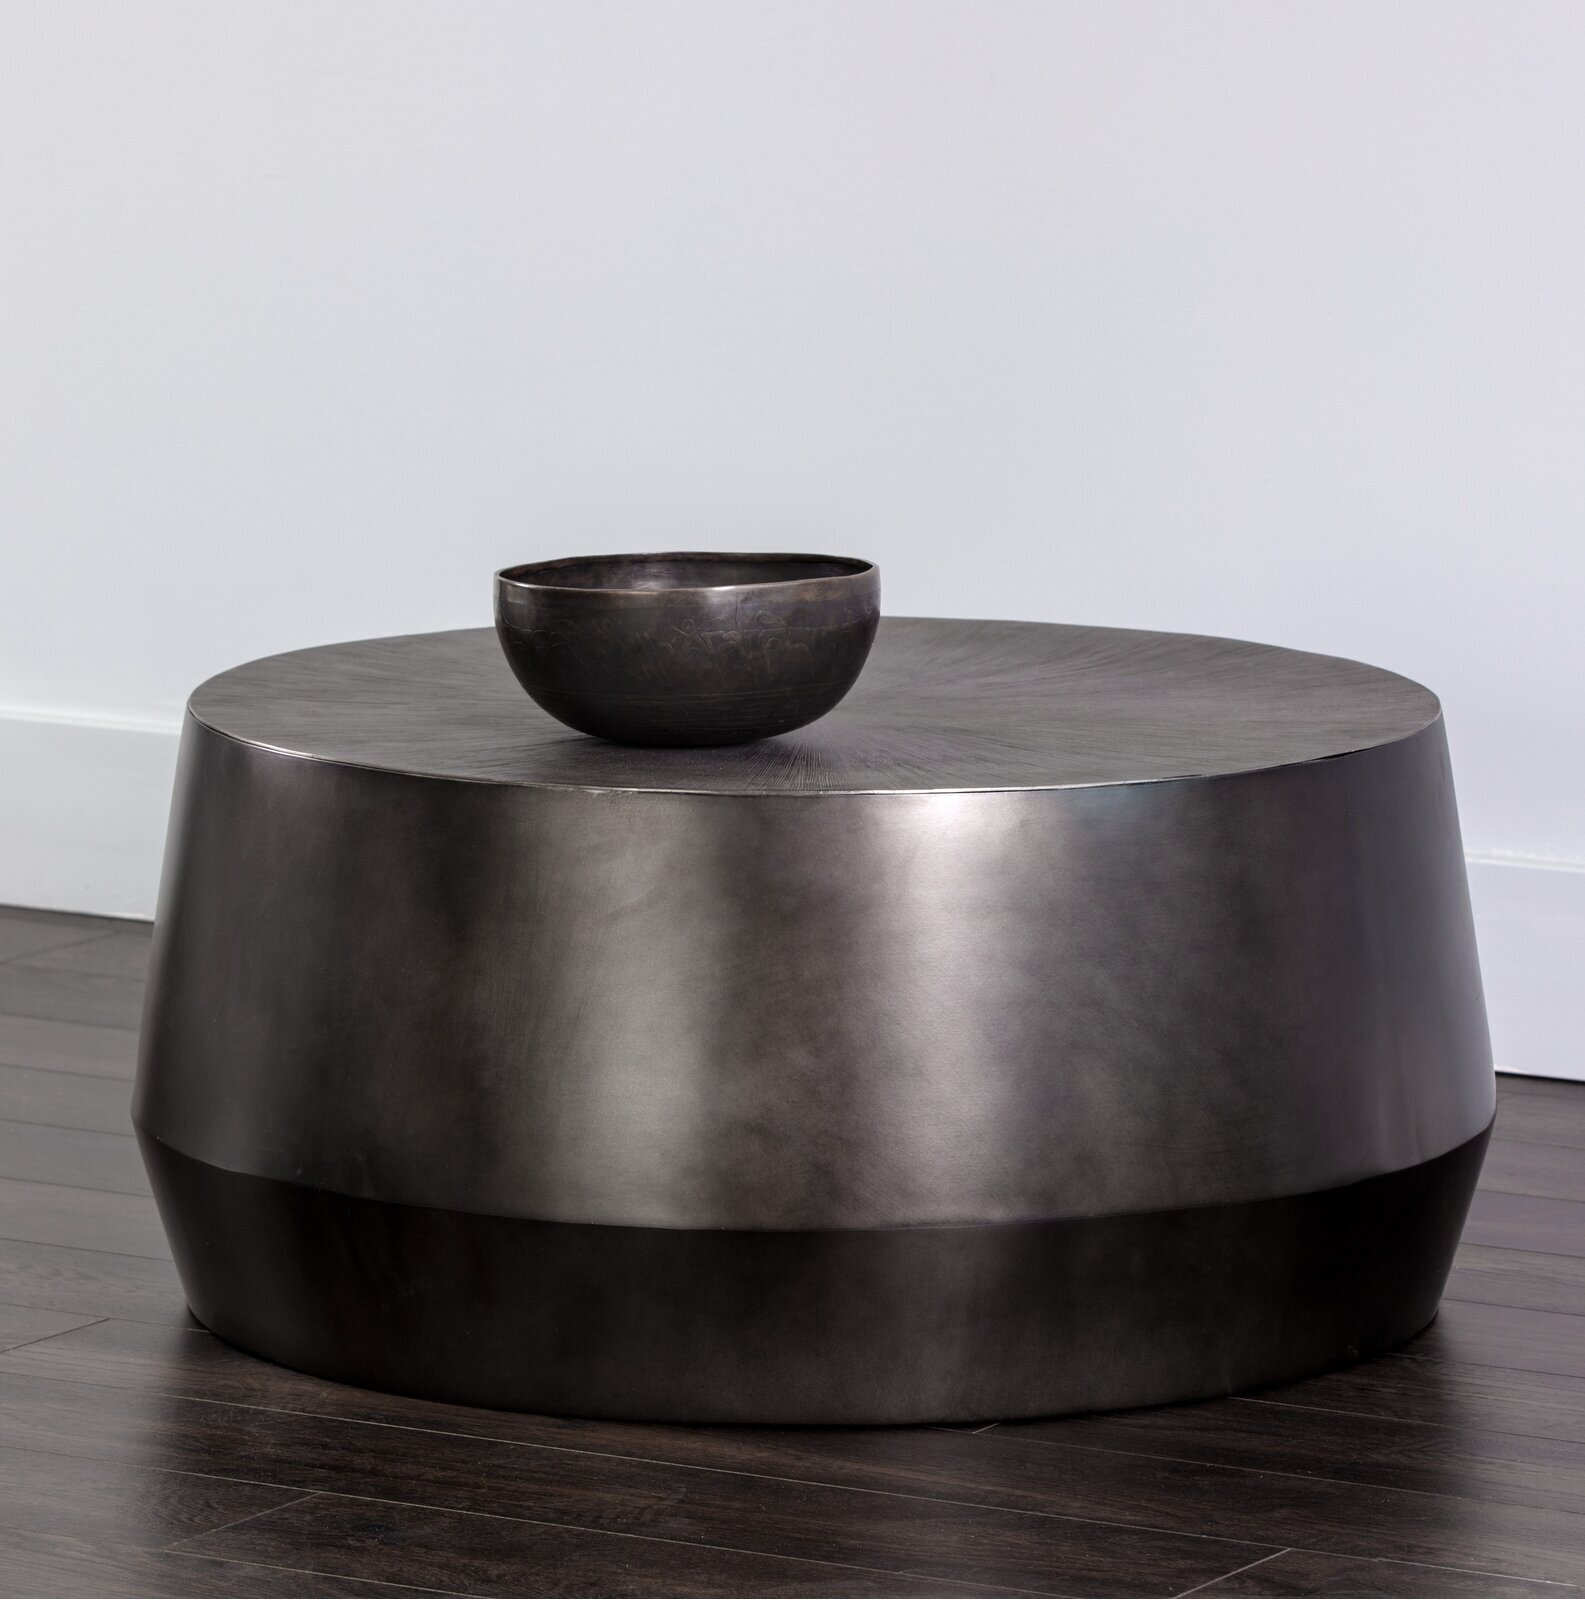 Metal Black Round Coffee Table